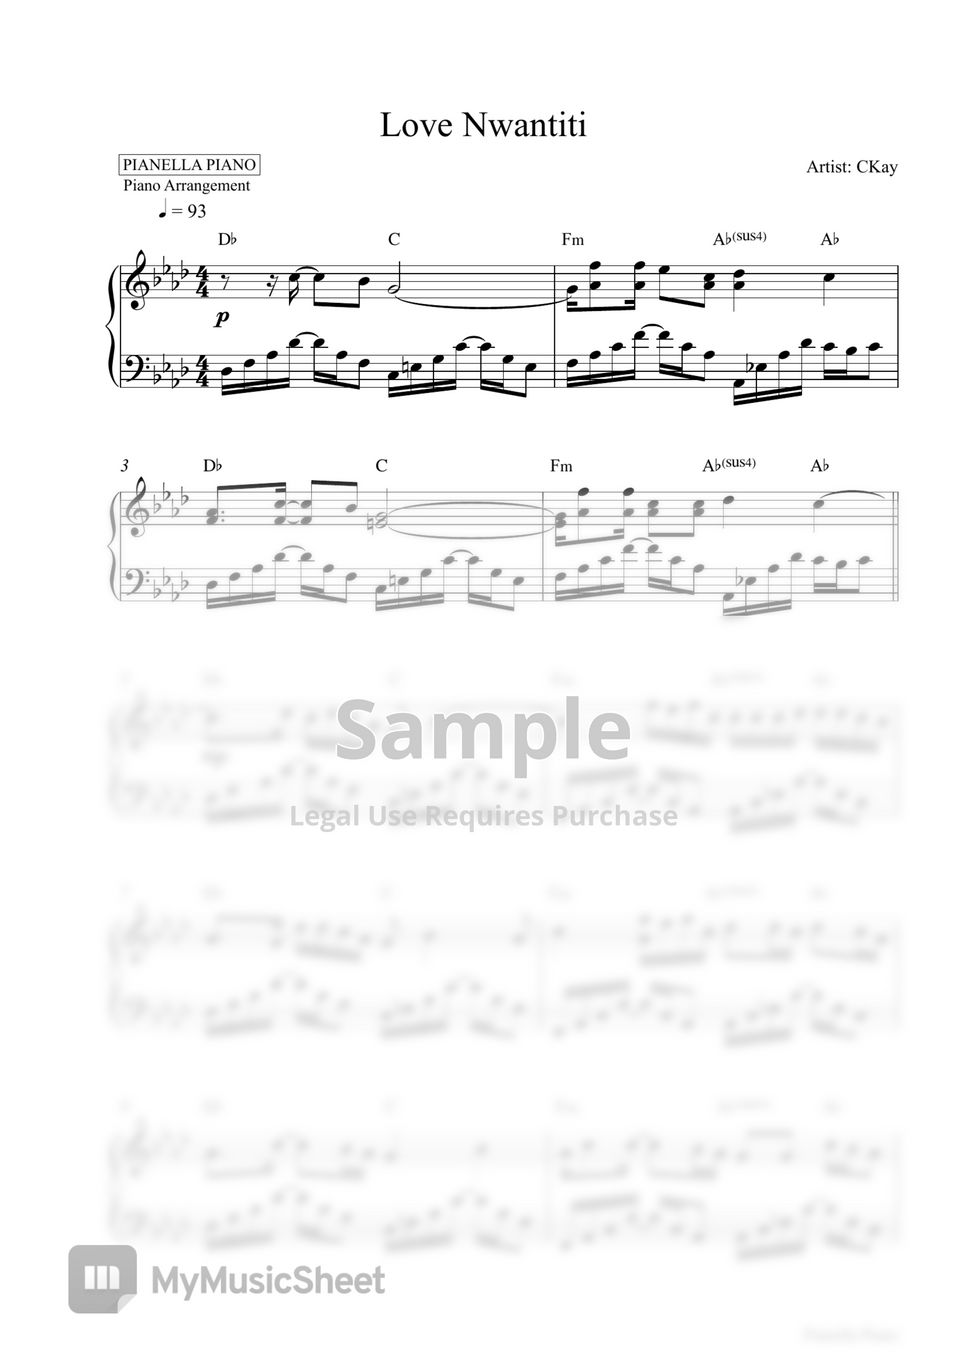 CKay - Love Nwantiti (Piano Sheet) by Pianella Piano